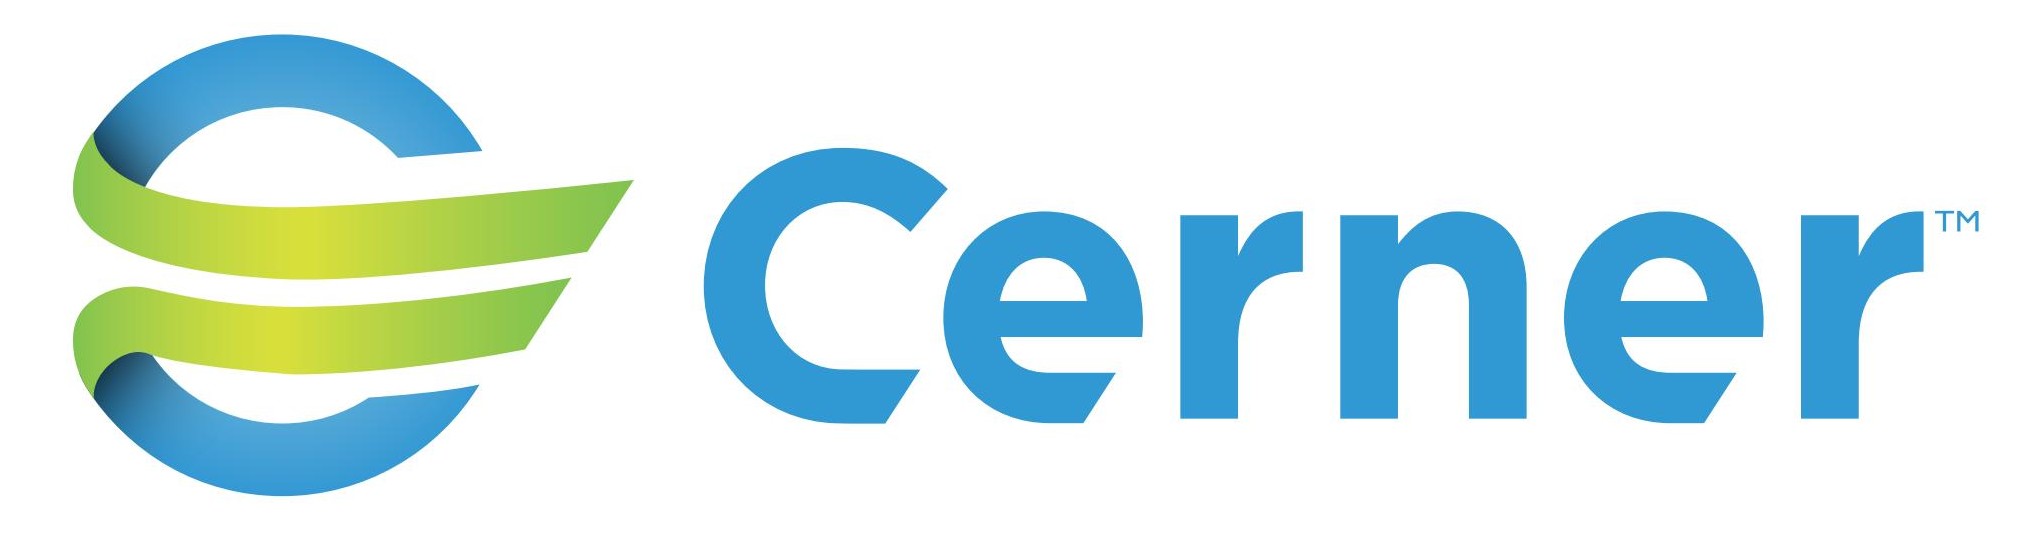 Cerner Corp Brand Logo